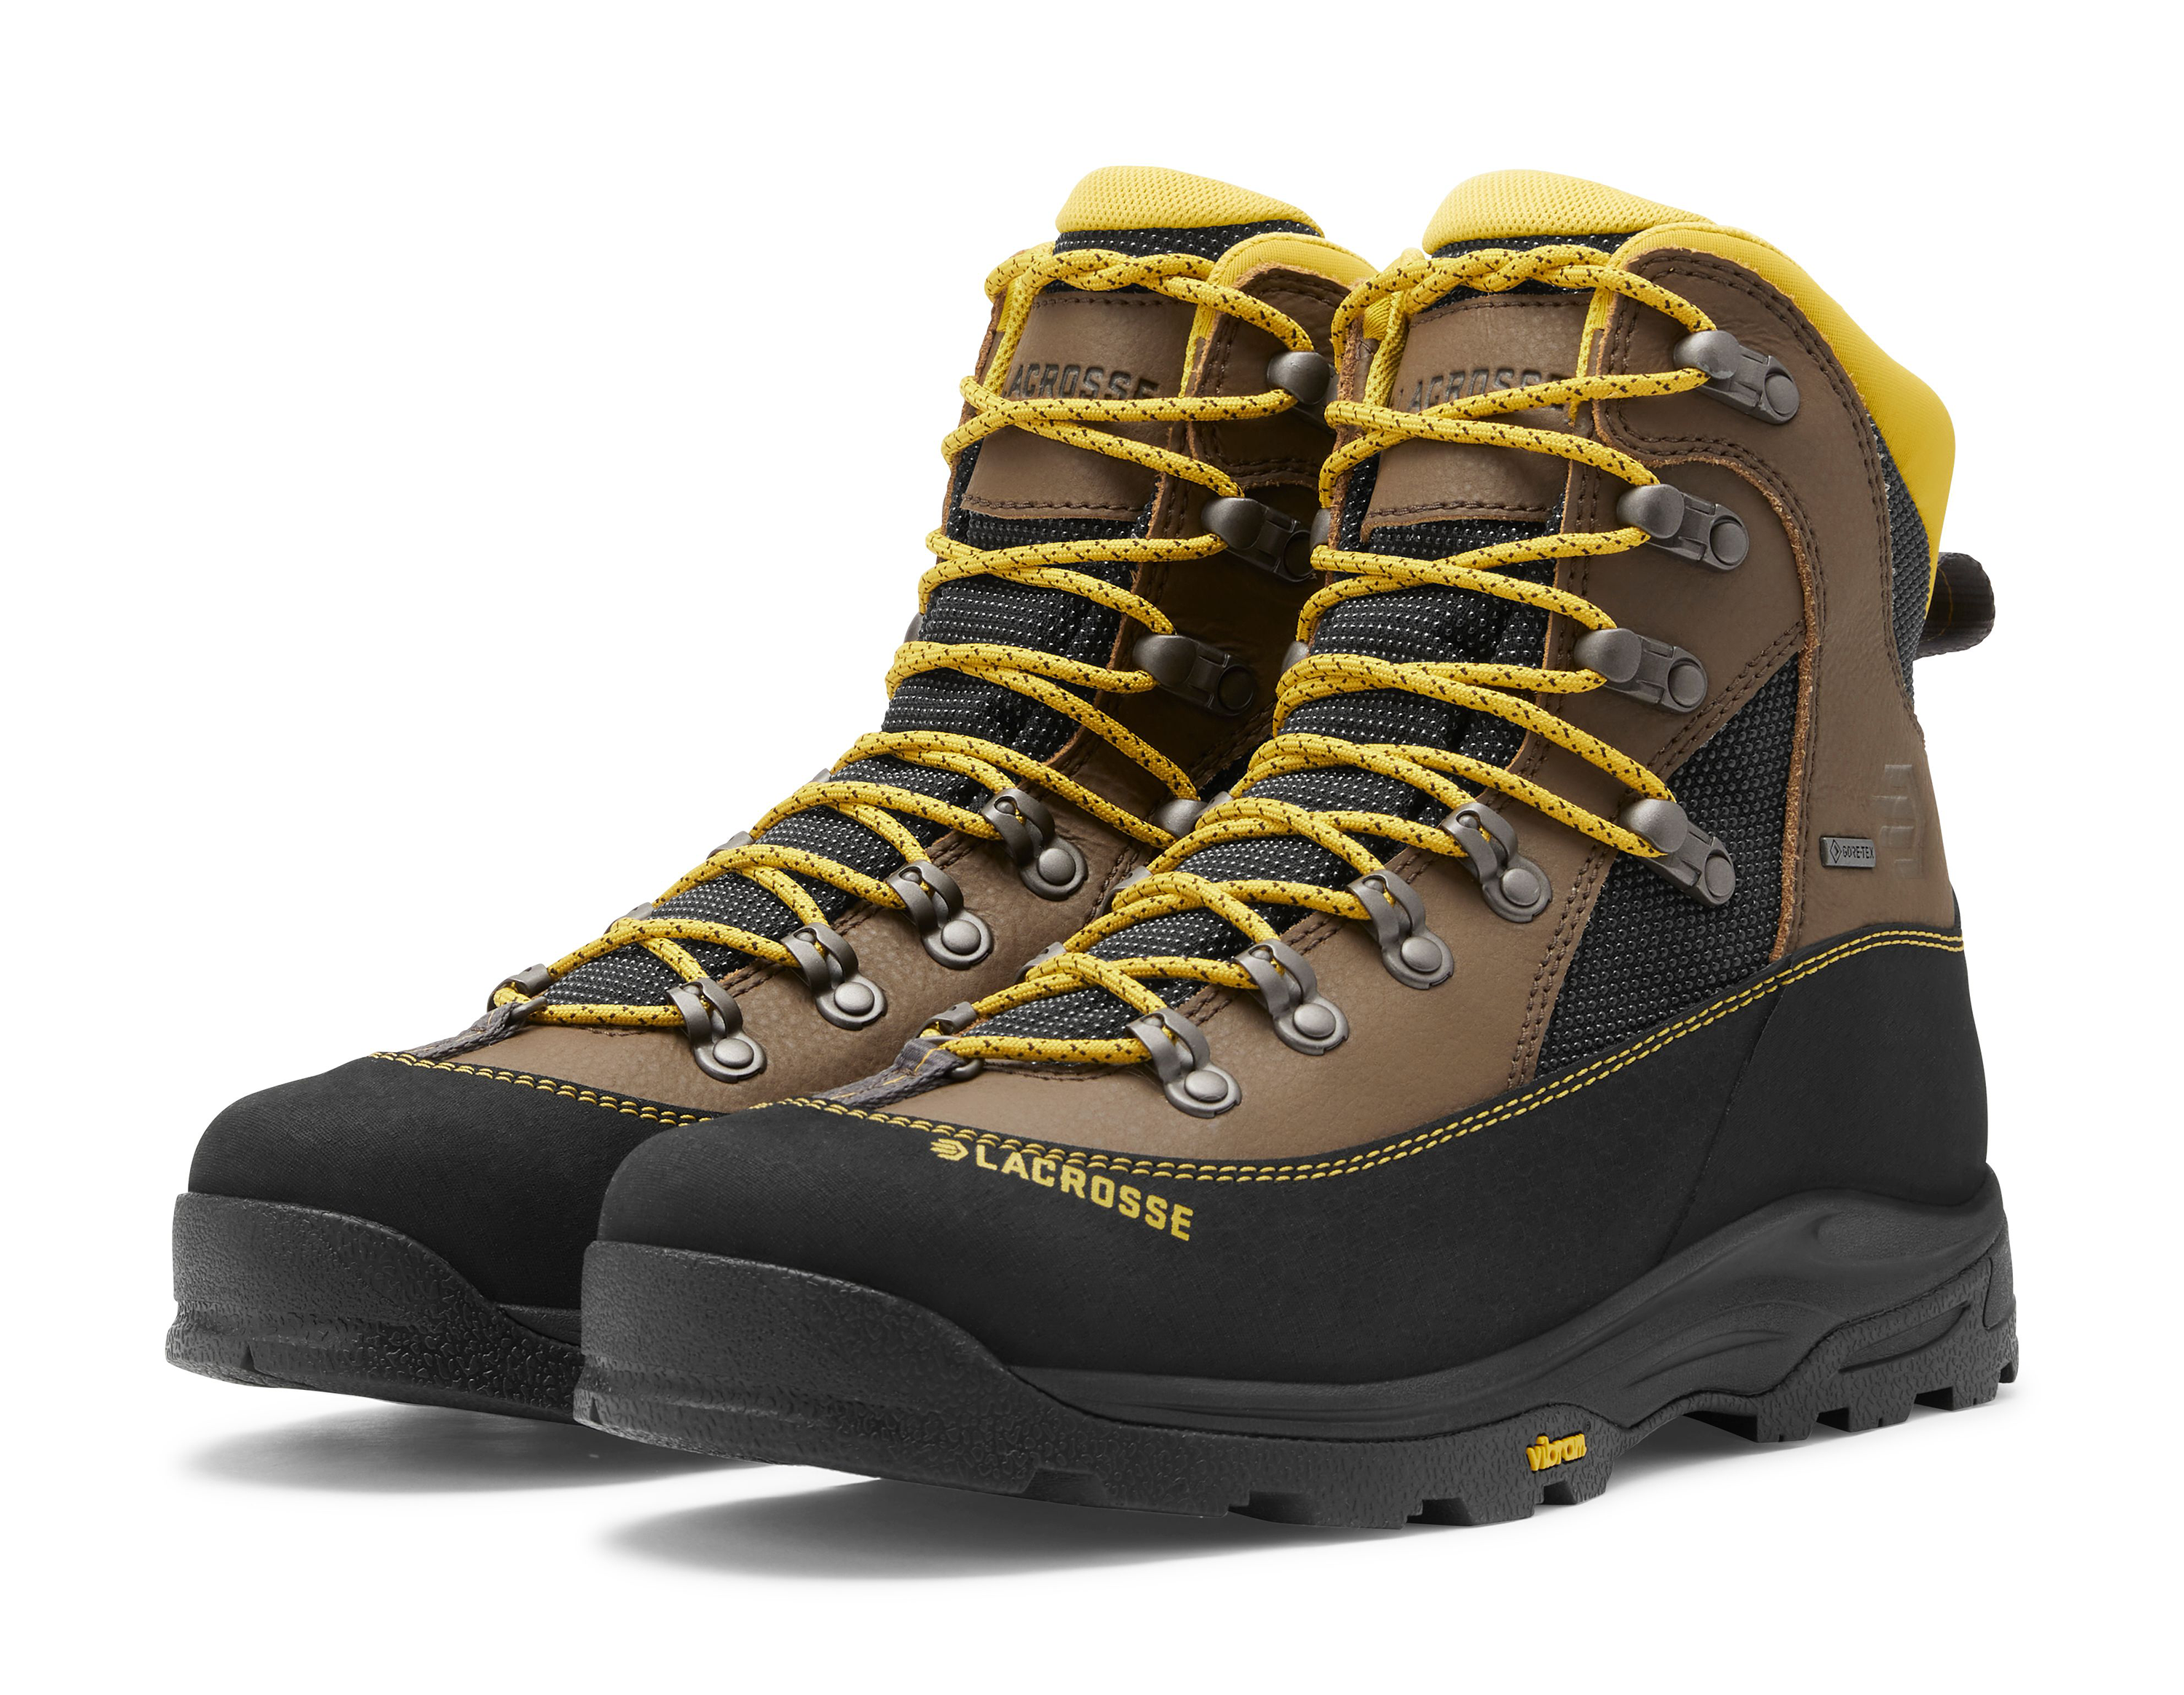 LaCrosse Ursa MS GORE-TEX Hunting Boots for Men - Gunmetal/Orange - 7.5M